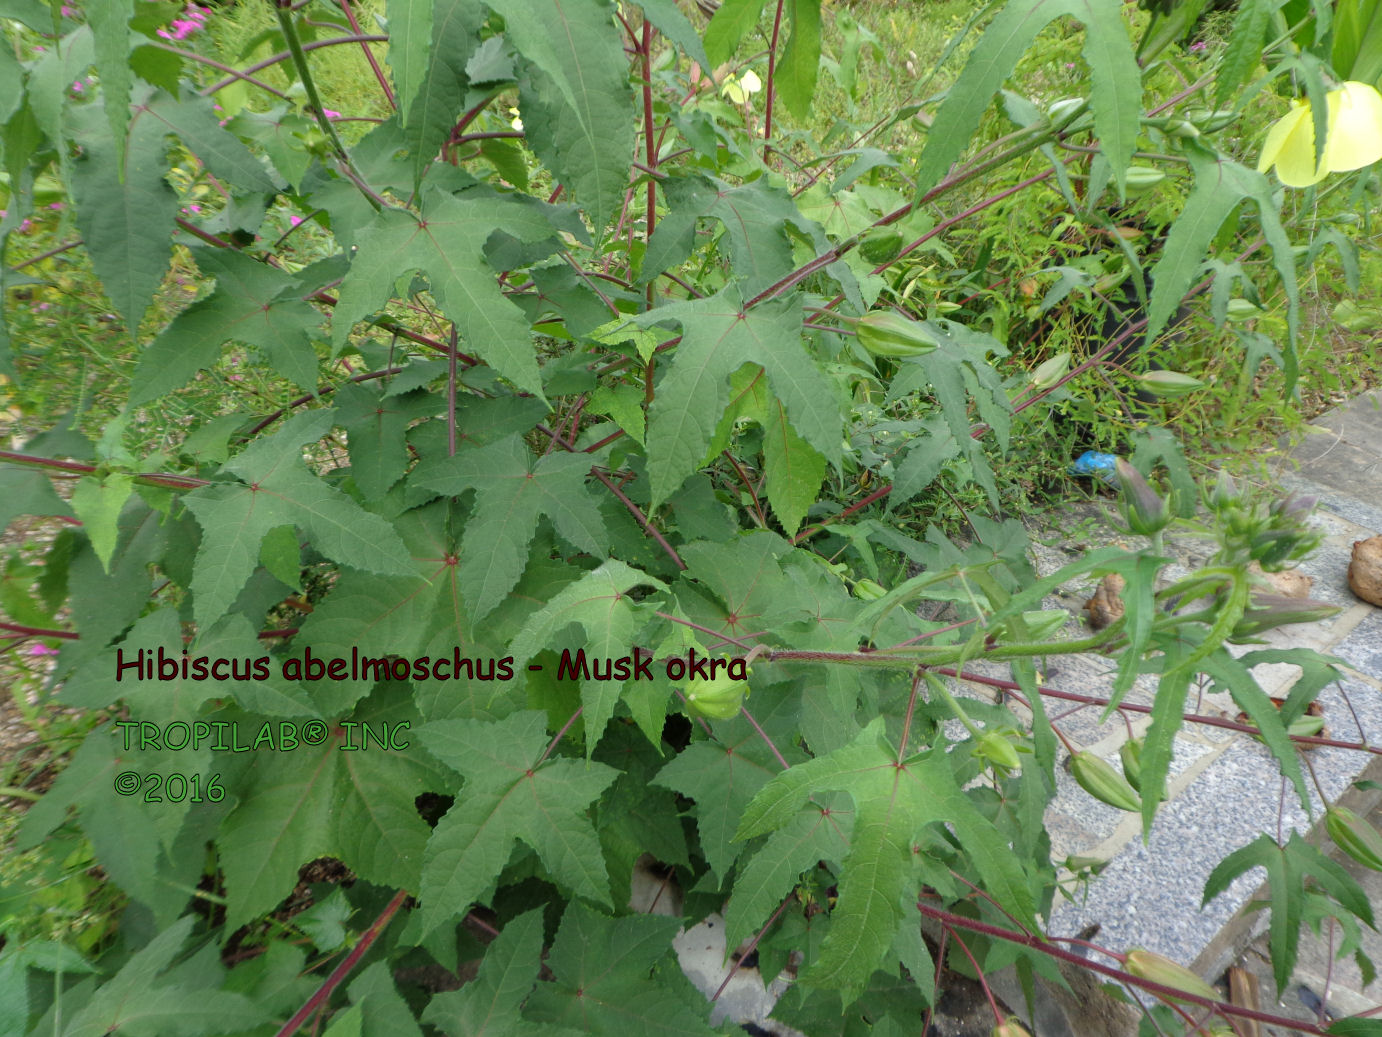 Hibiscus abelmoschus - Musk okra leaves